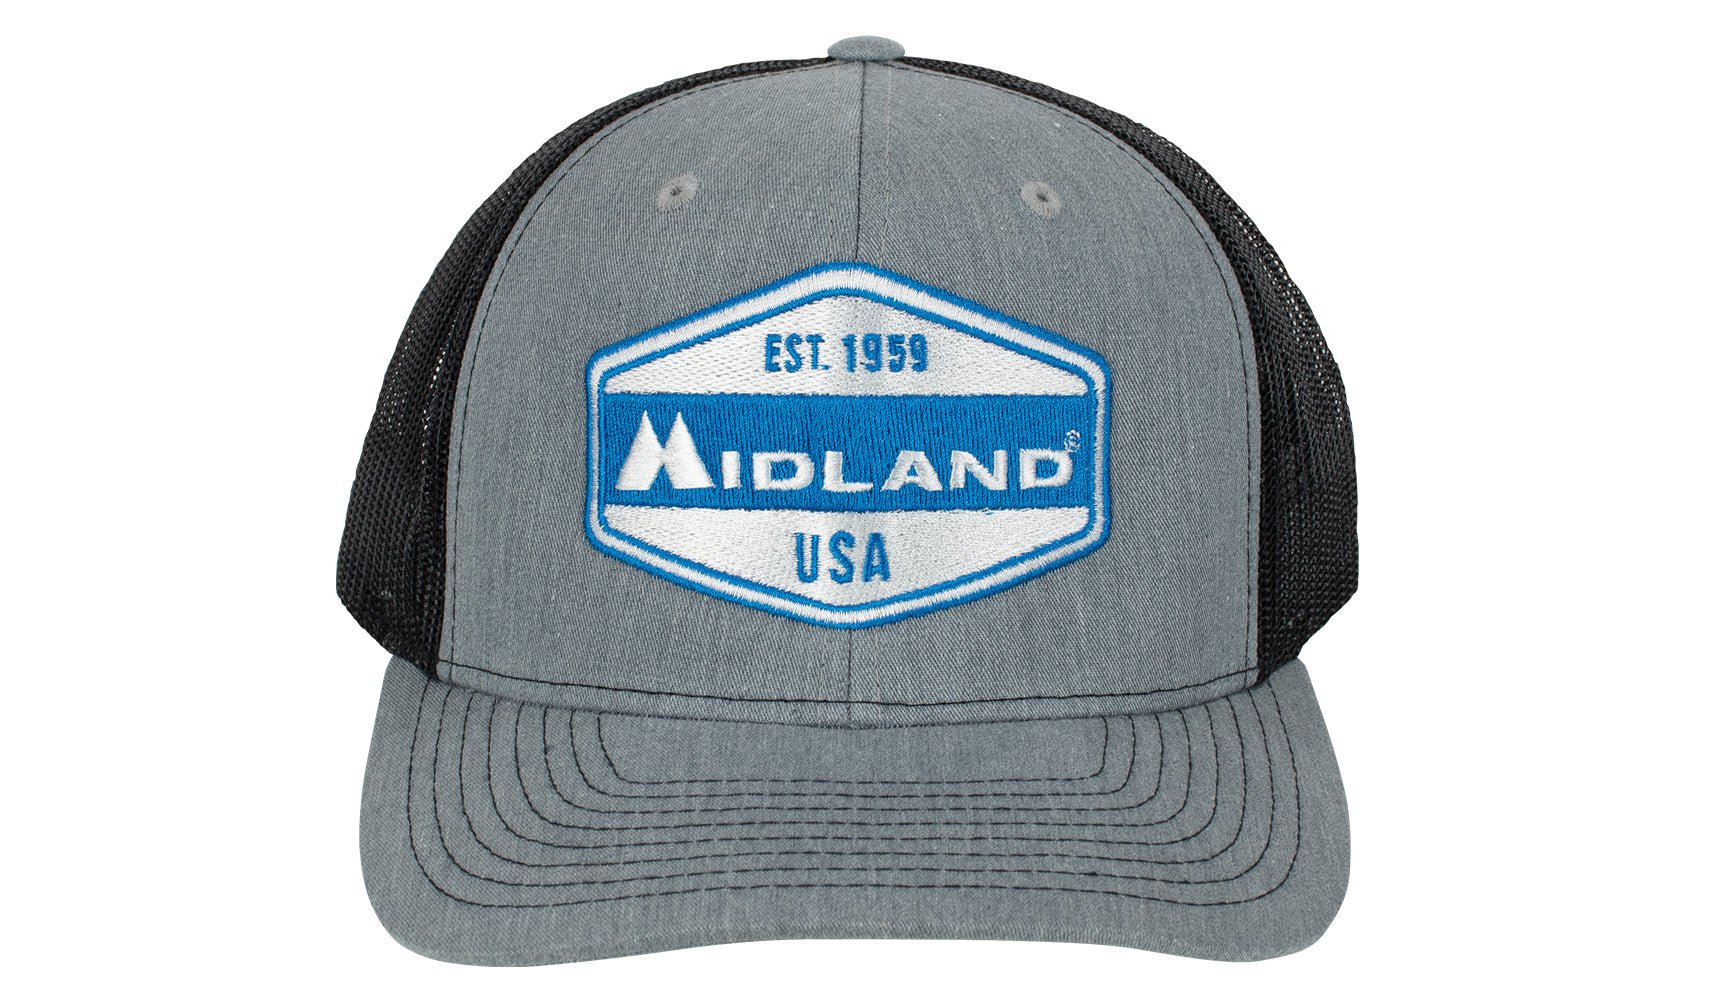 Midland Est. "1959" Crest Hat